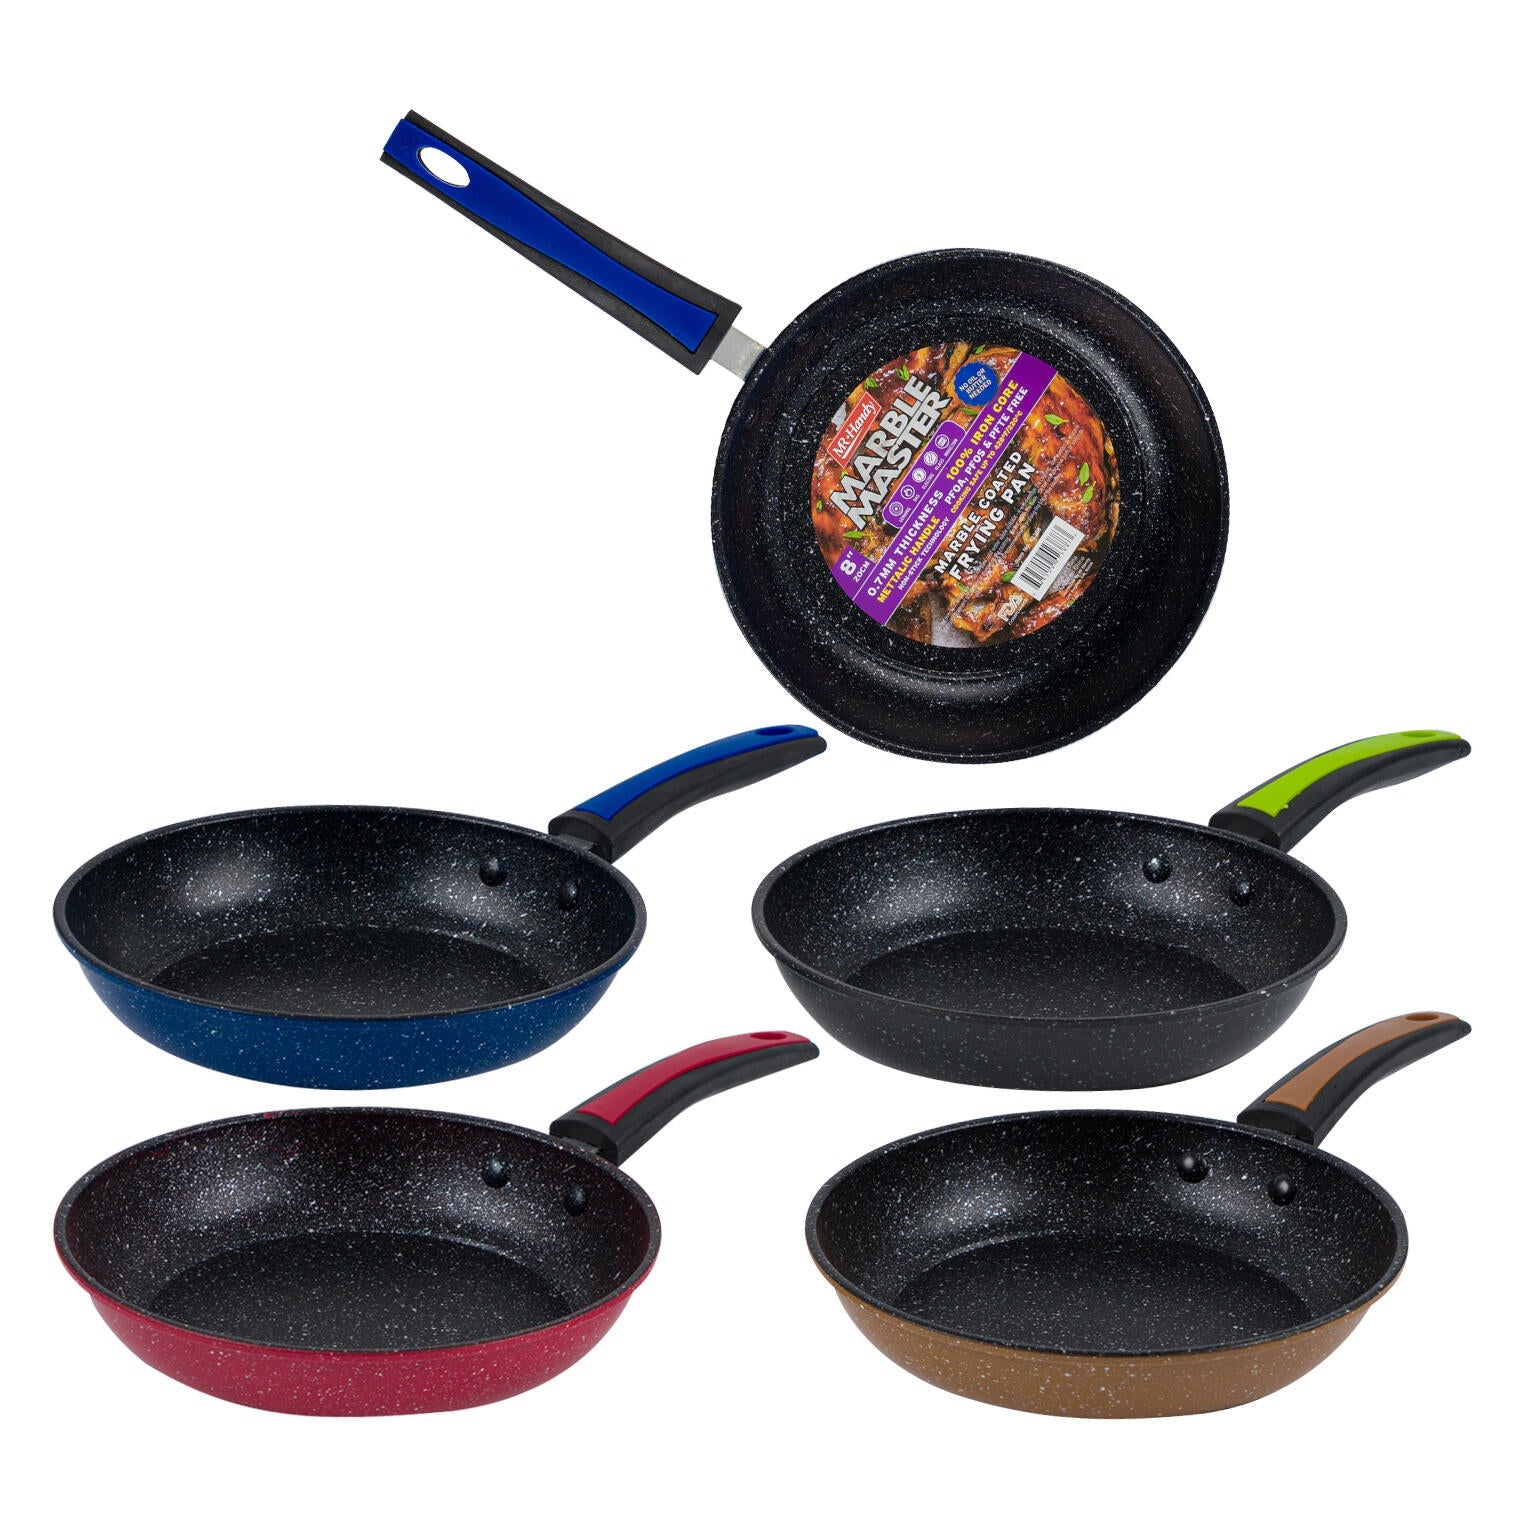 Mr. Handy Marble Coating Frying Pan w/ Colorful Handle - 8